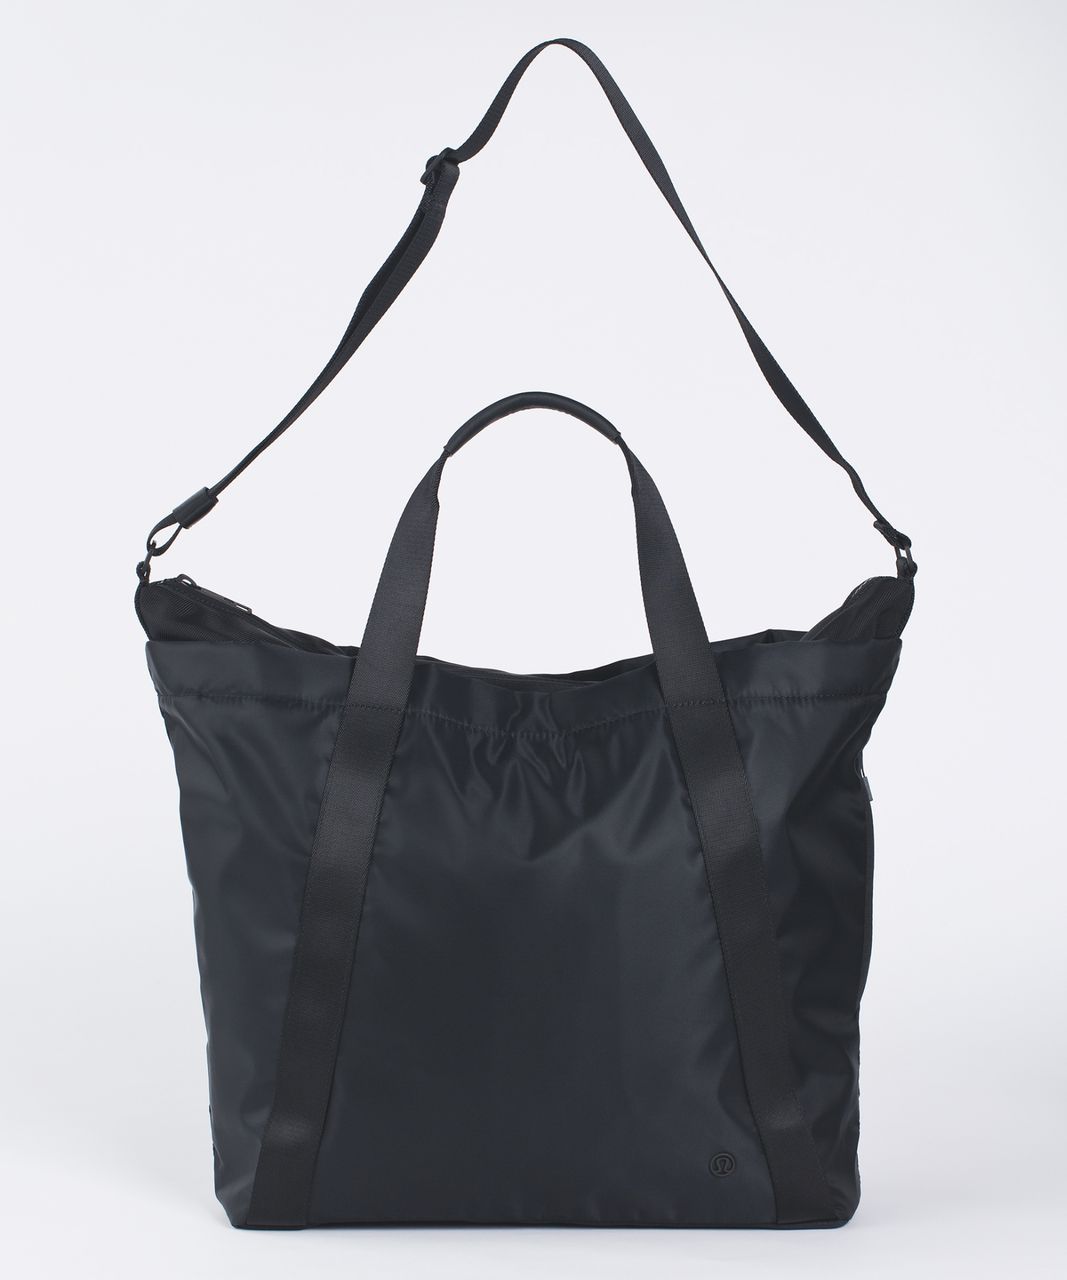 Lululemon Carry The Day Bag - Black